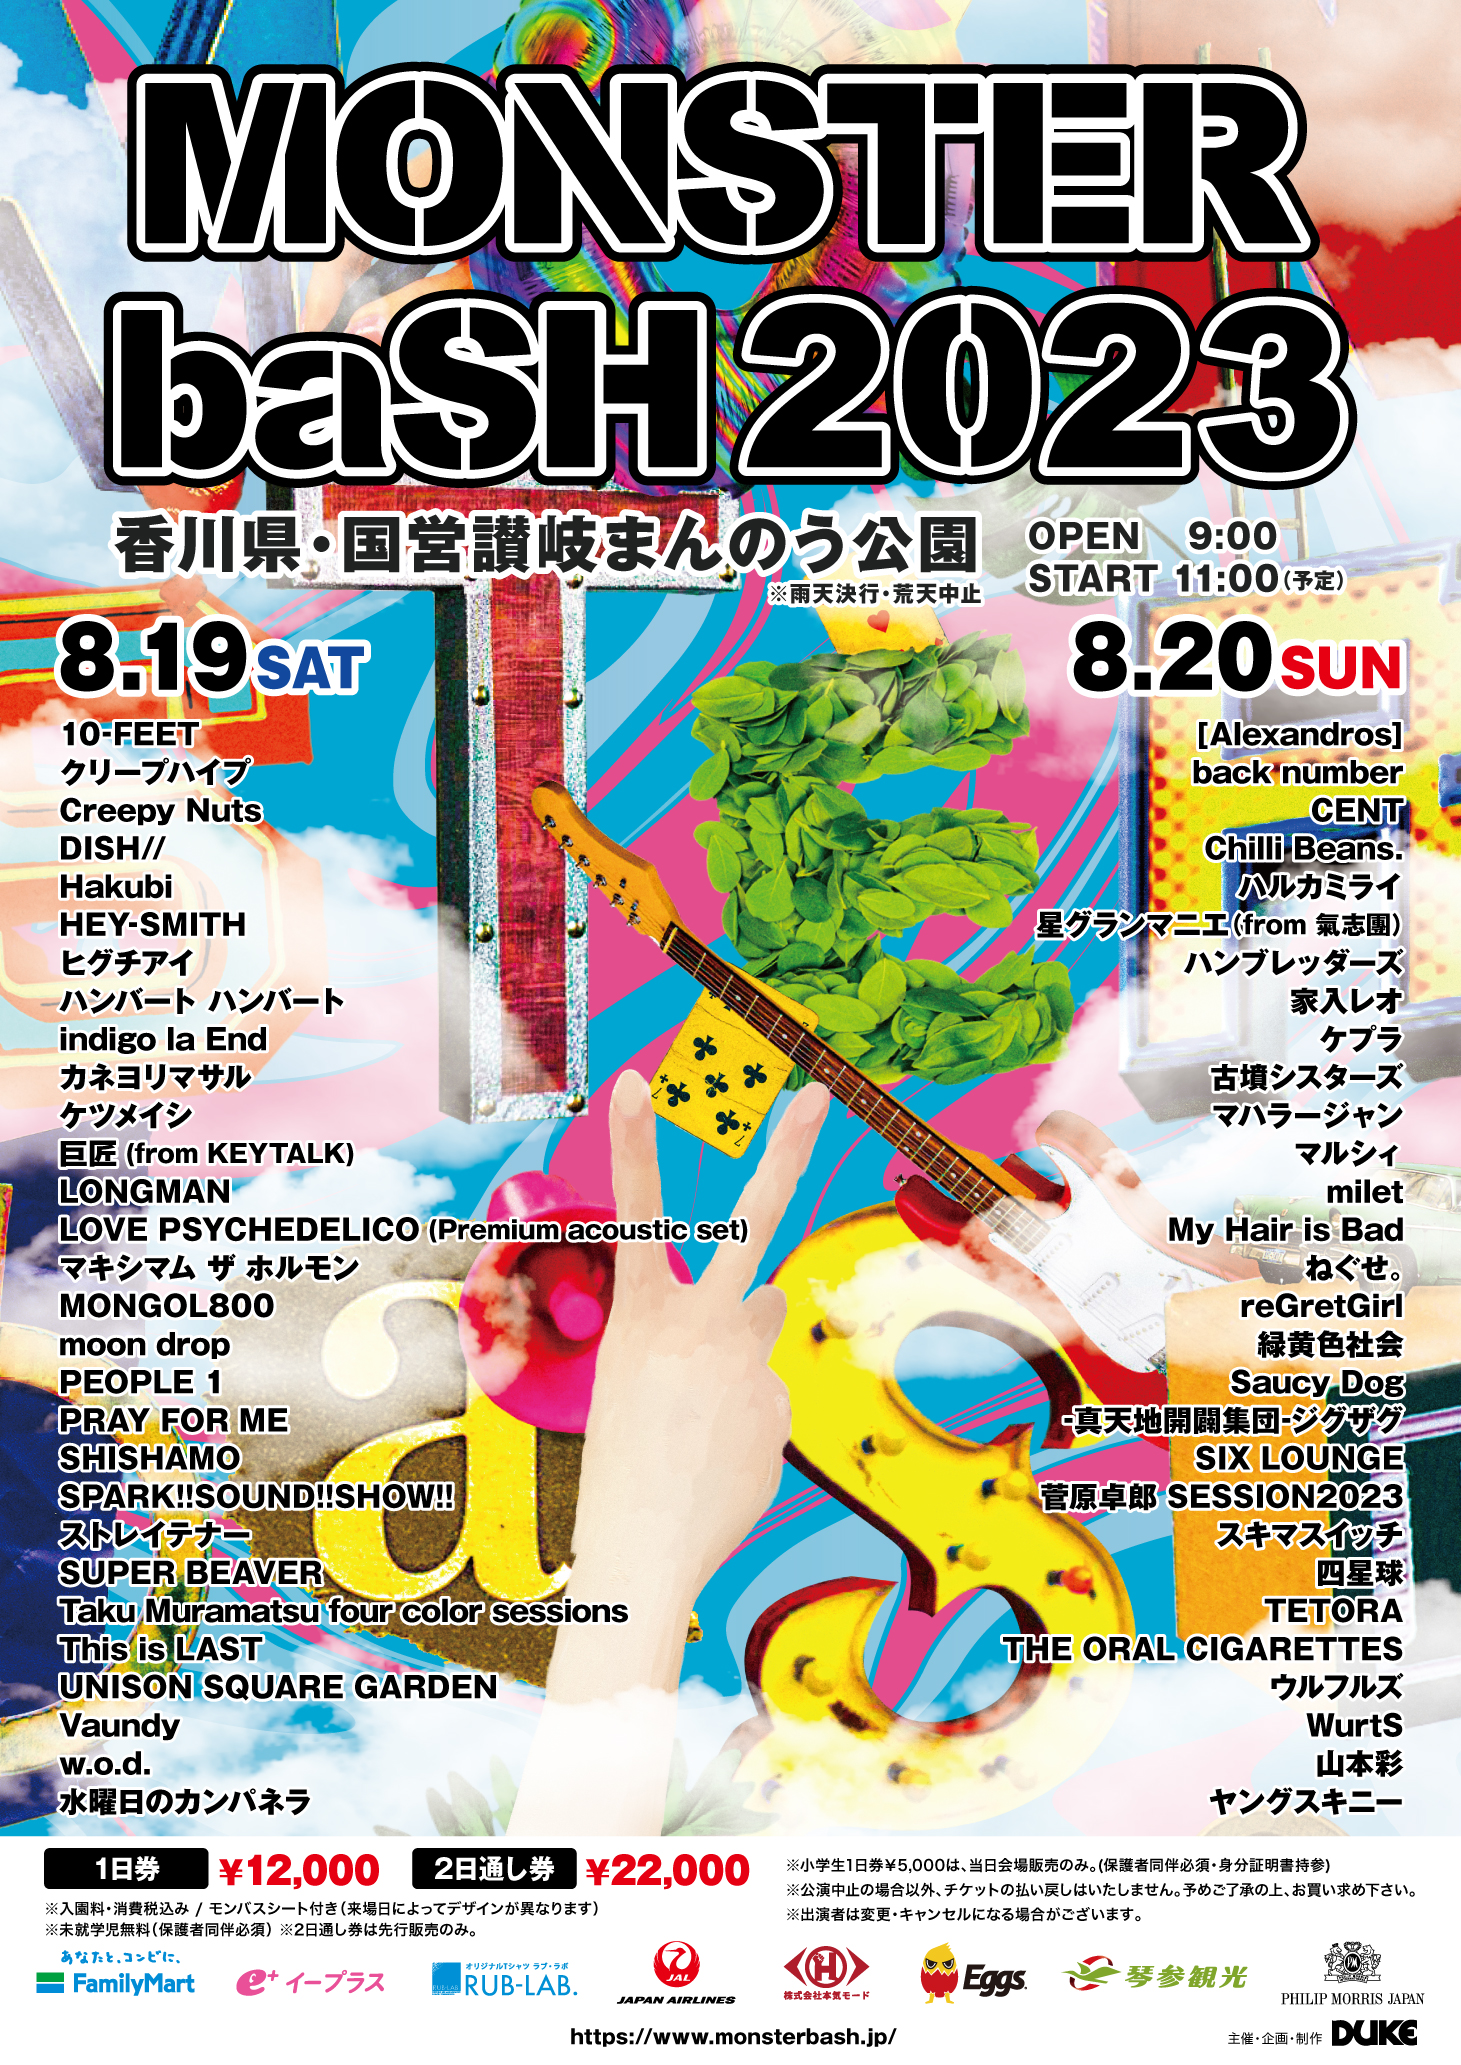 MONSTER baSH 2023」日割り発表！ - WurtS Official Website